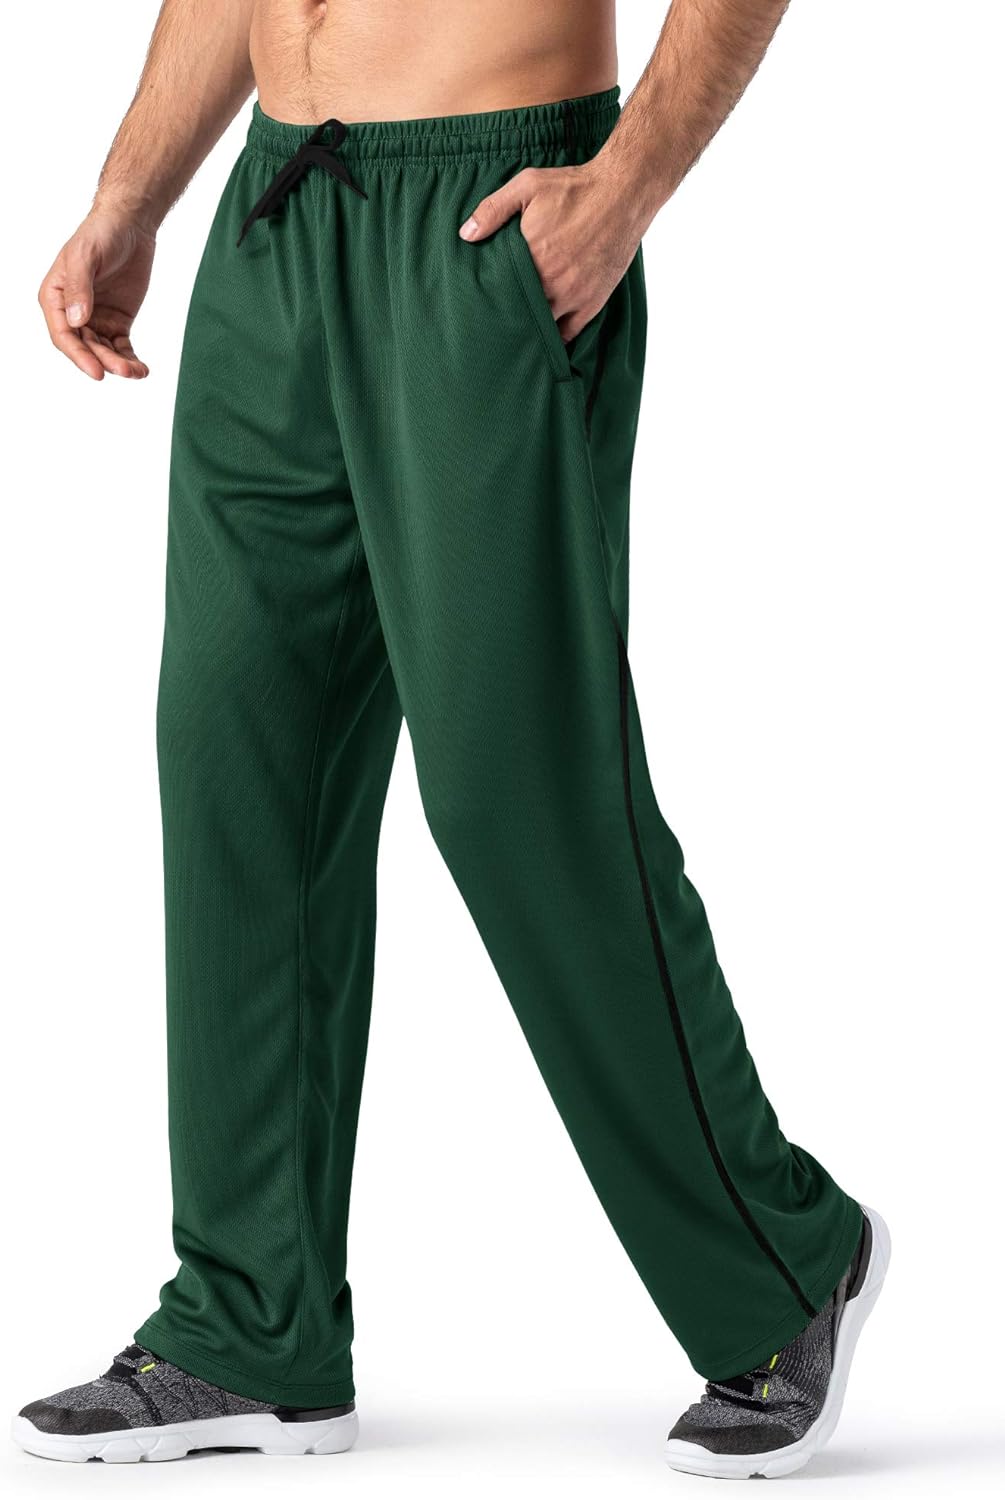 Relaxed Fit Sweatpants - Light khaki green - Men